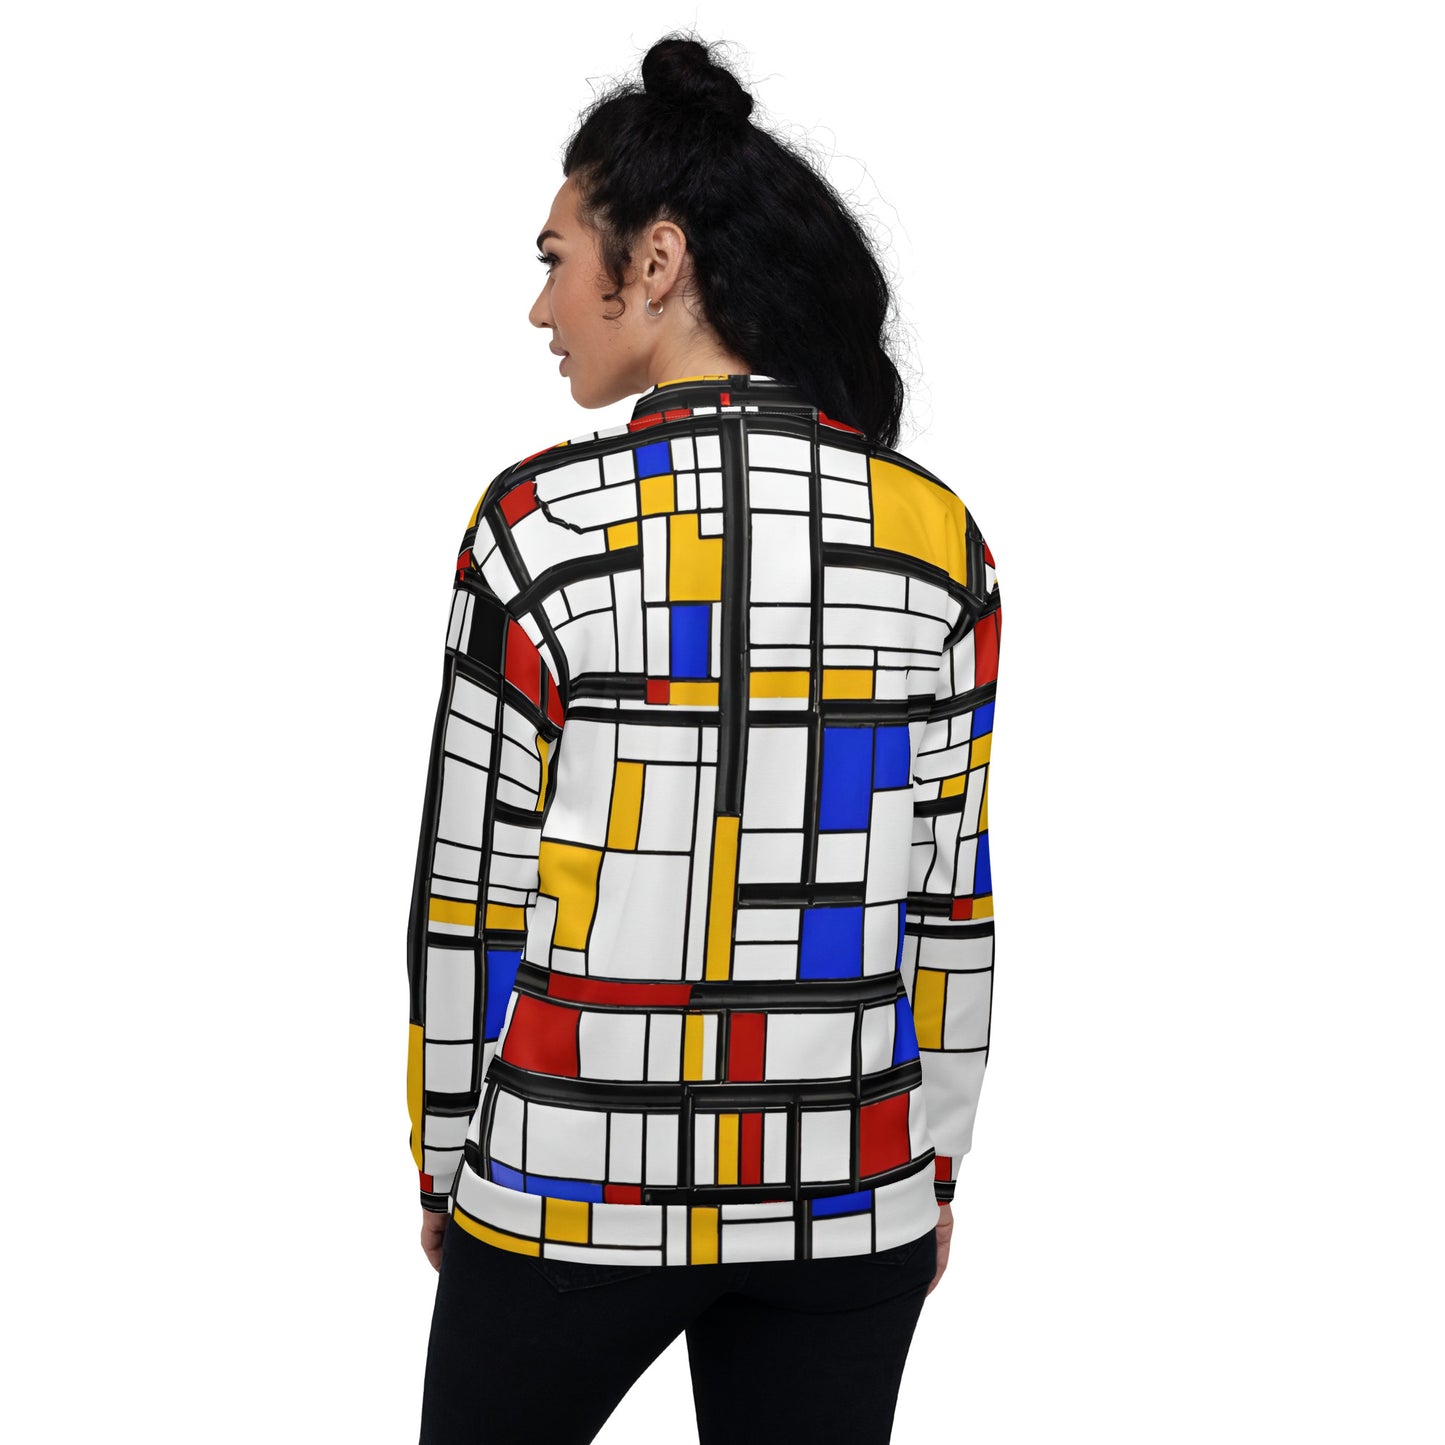 Unisex Bomber Jacket / Piet Mondrian jacket (AI created)